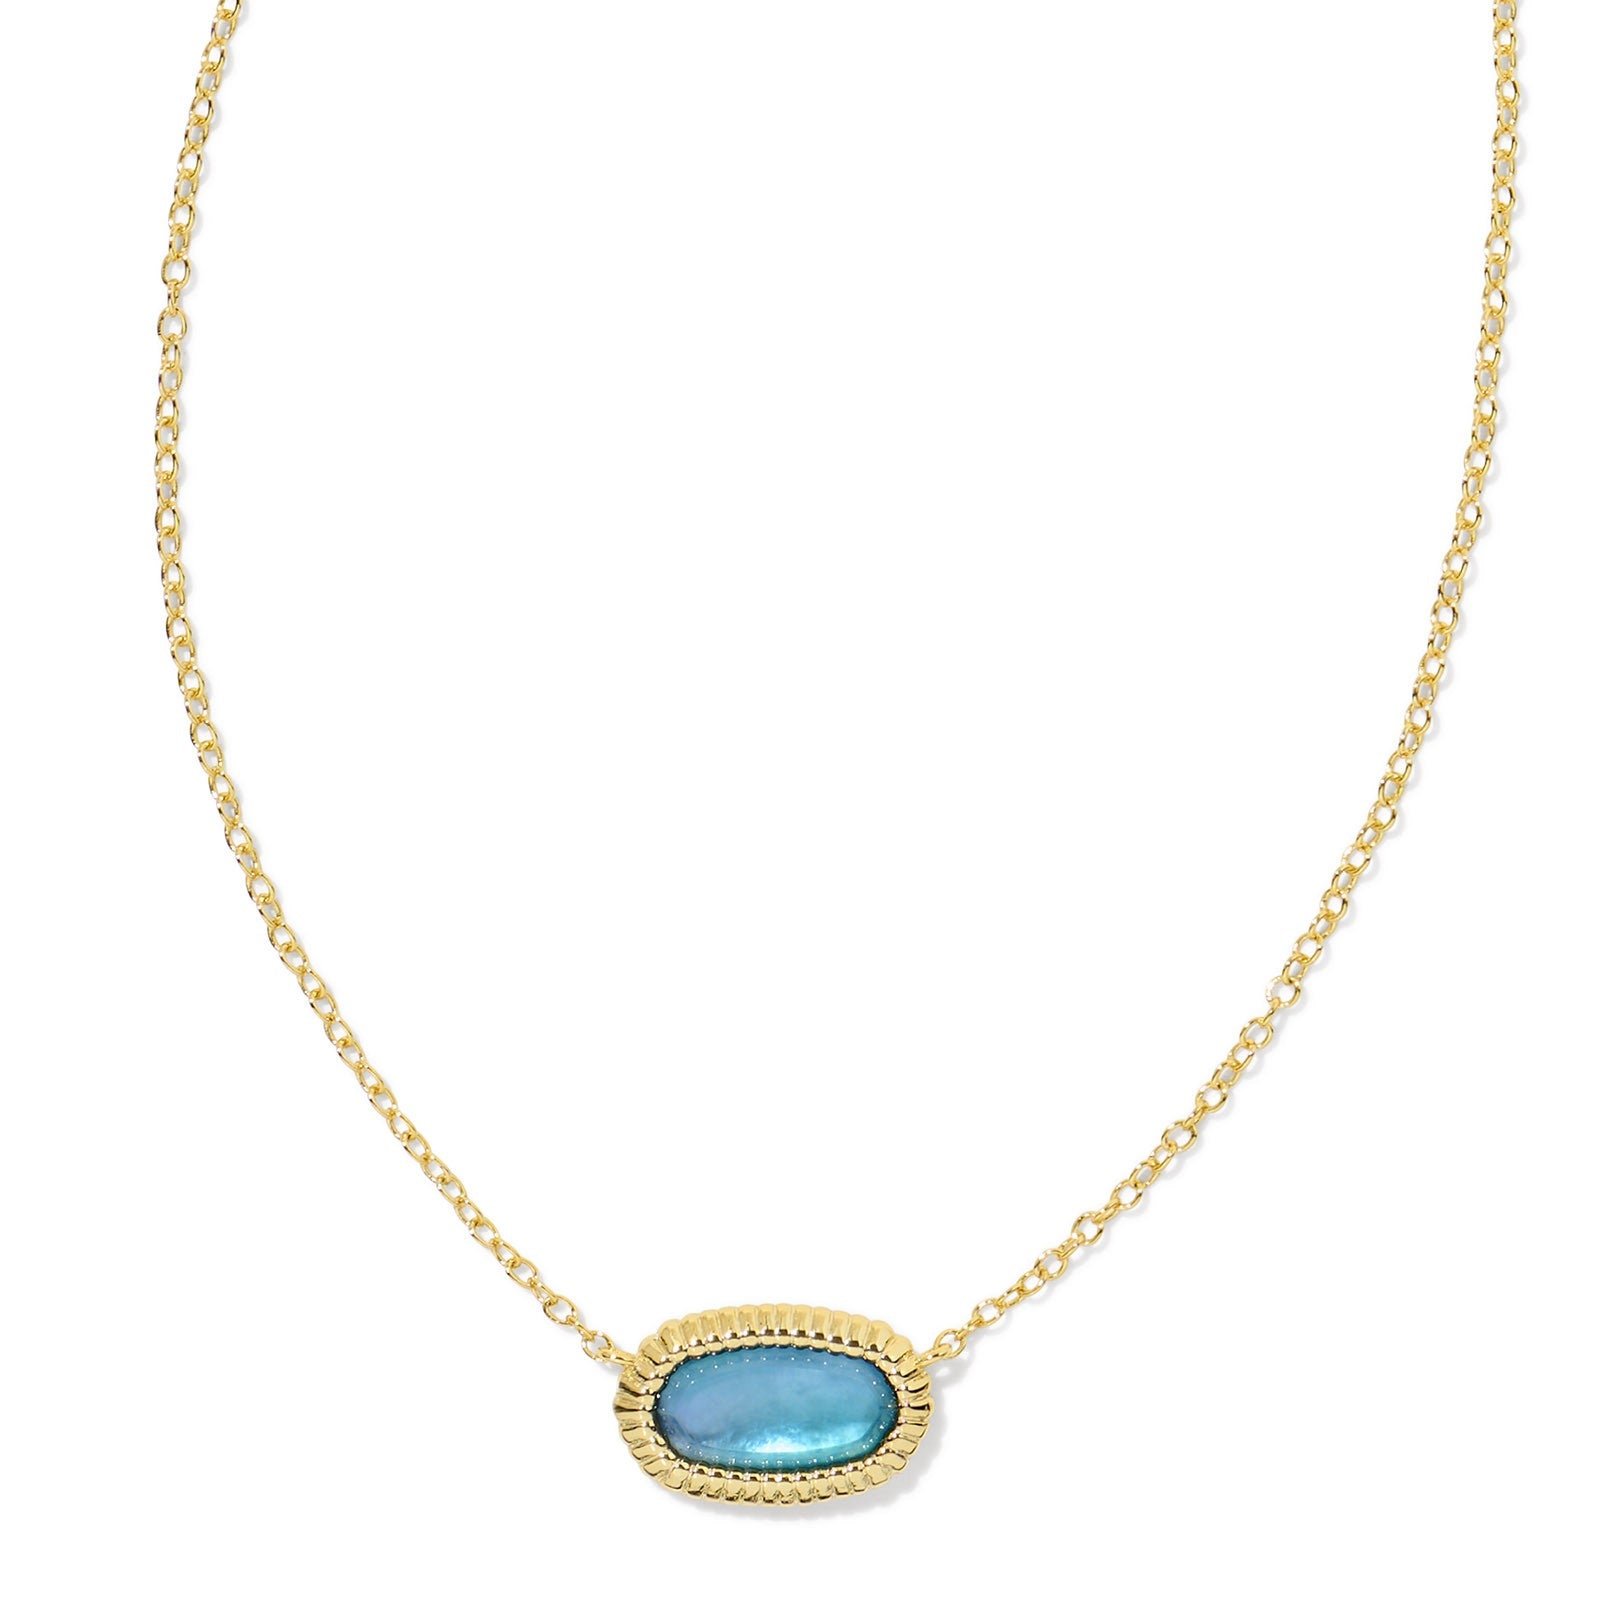 Kendra Scott | Elisa Gold Ridge Frame Short Pendant Necklace in Indigo Watercolor Illusion - Giddy Up Glamour Boutique